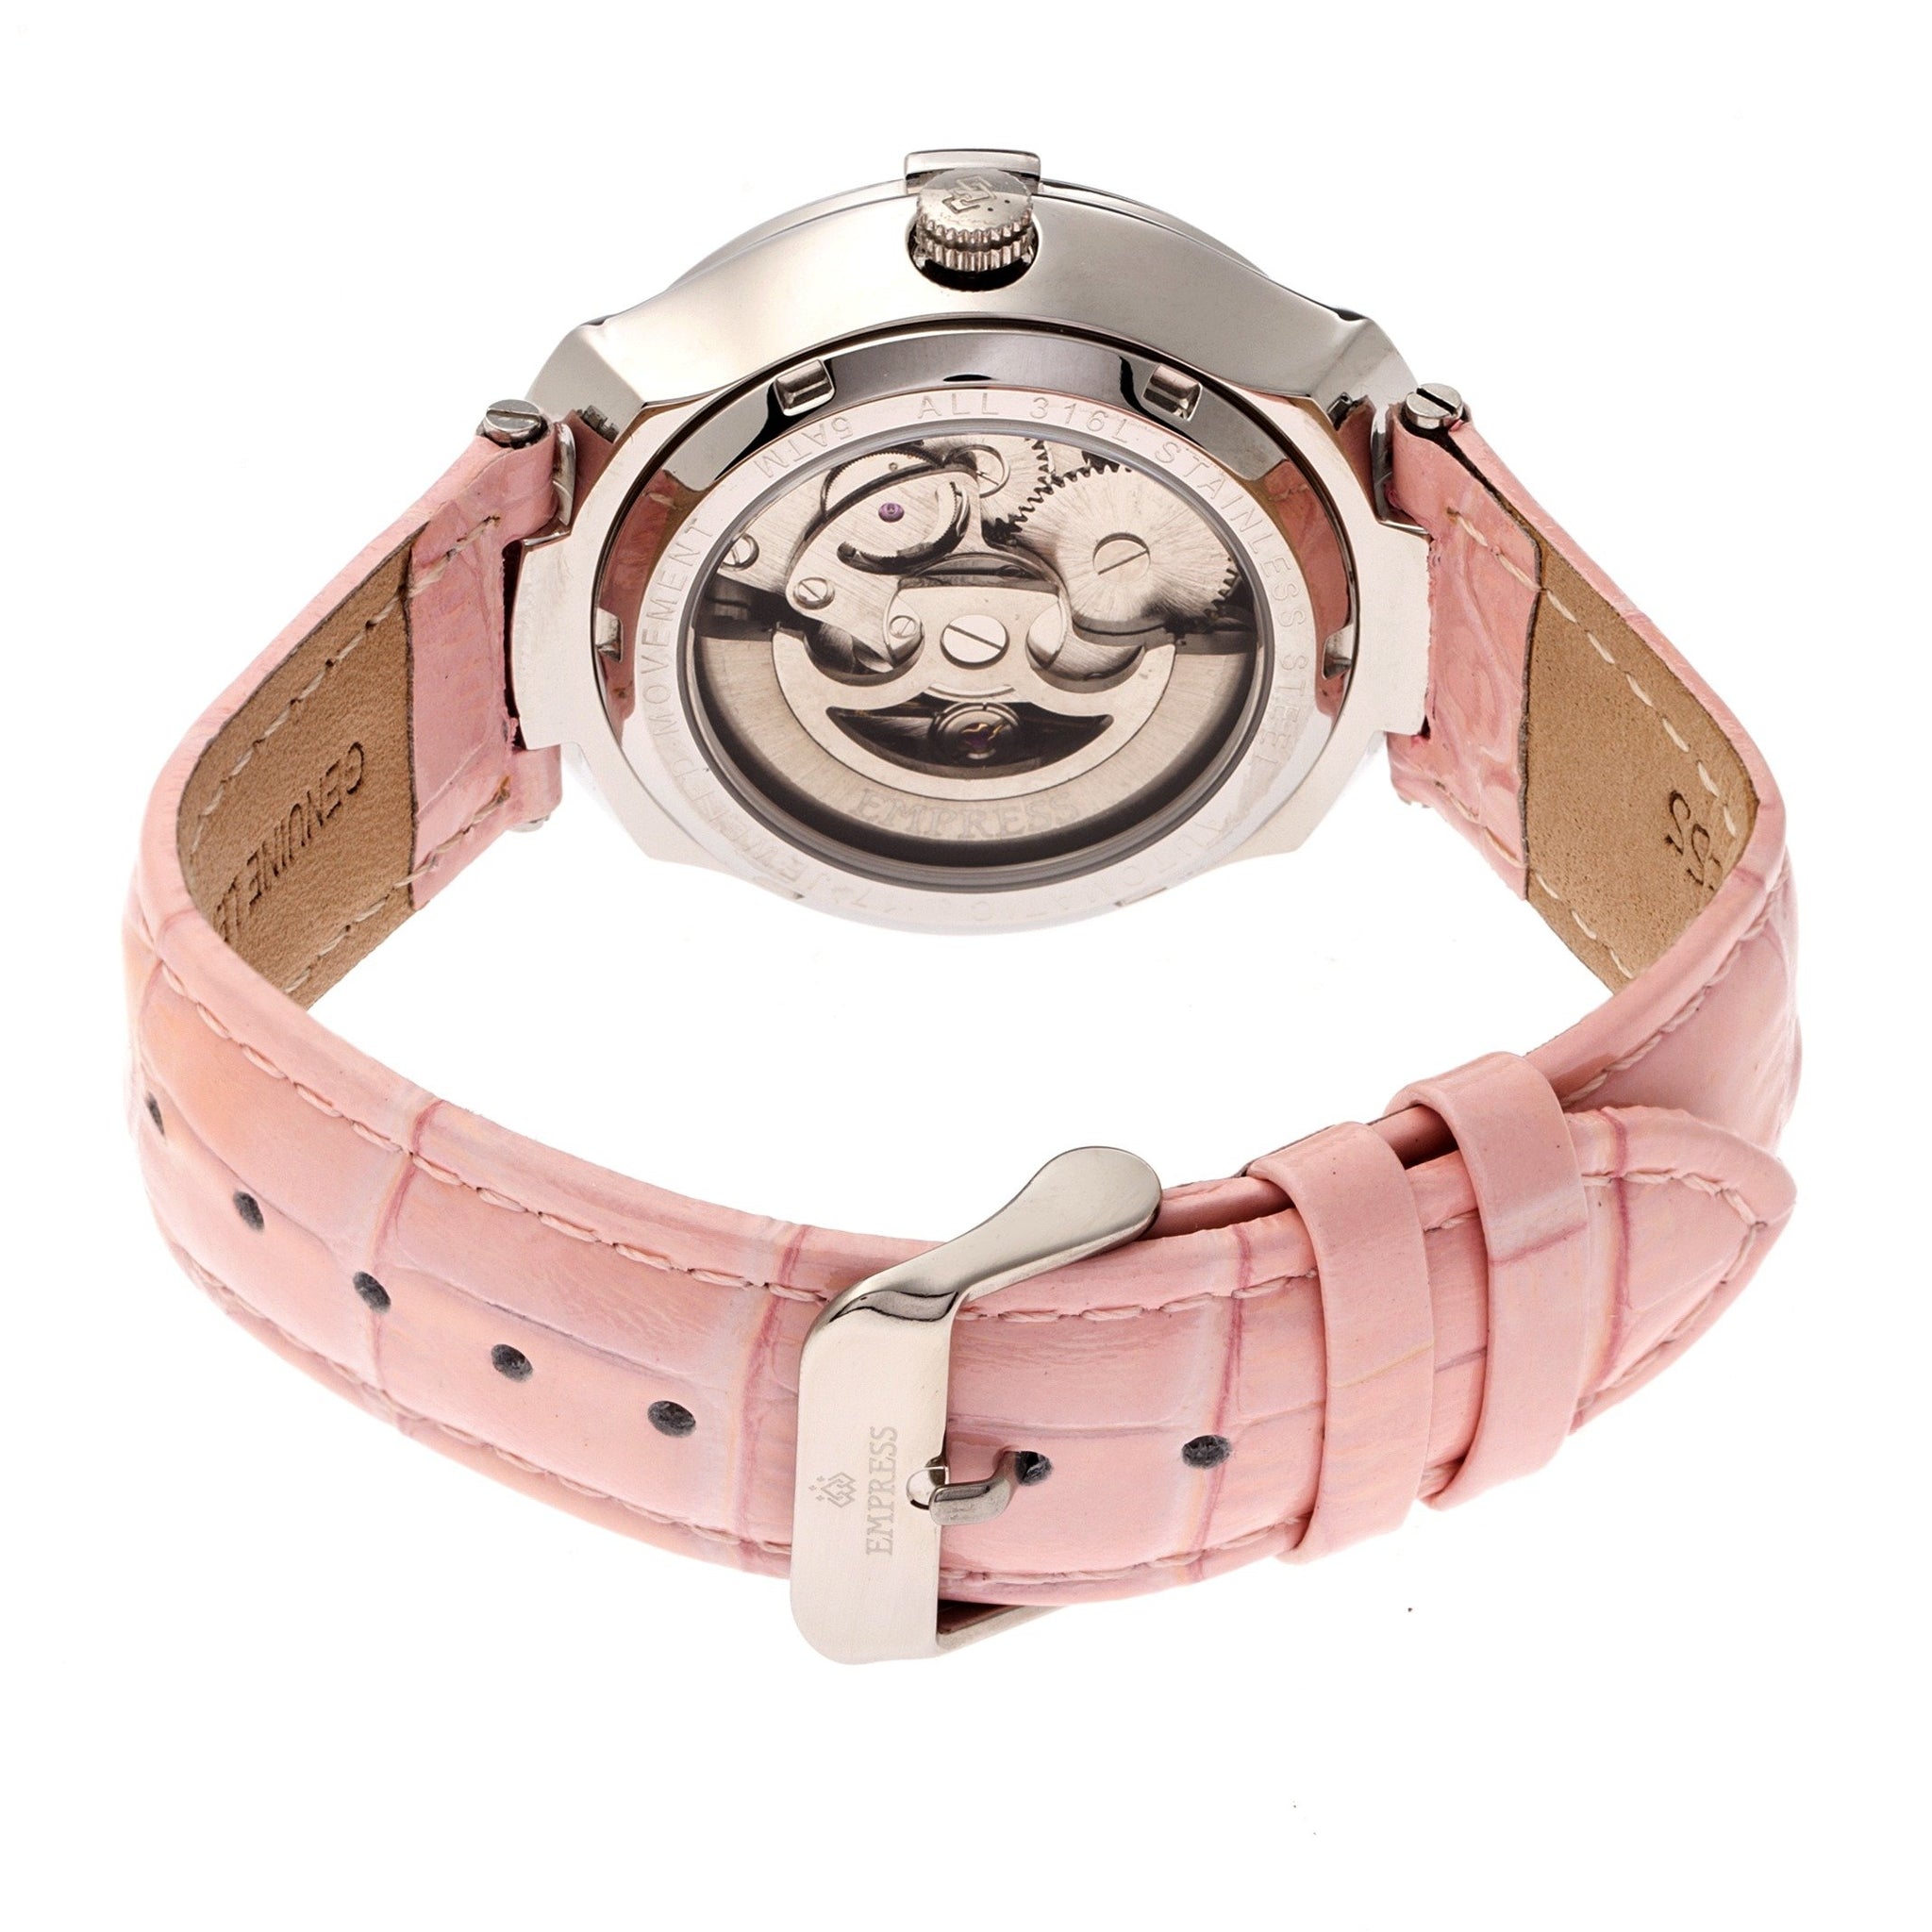 Empress Francesca Automatic MOP Leather-Band Watch - Light Pink - EMPEM2202